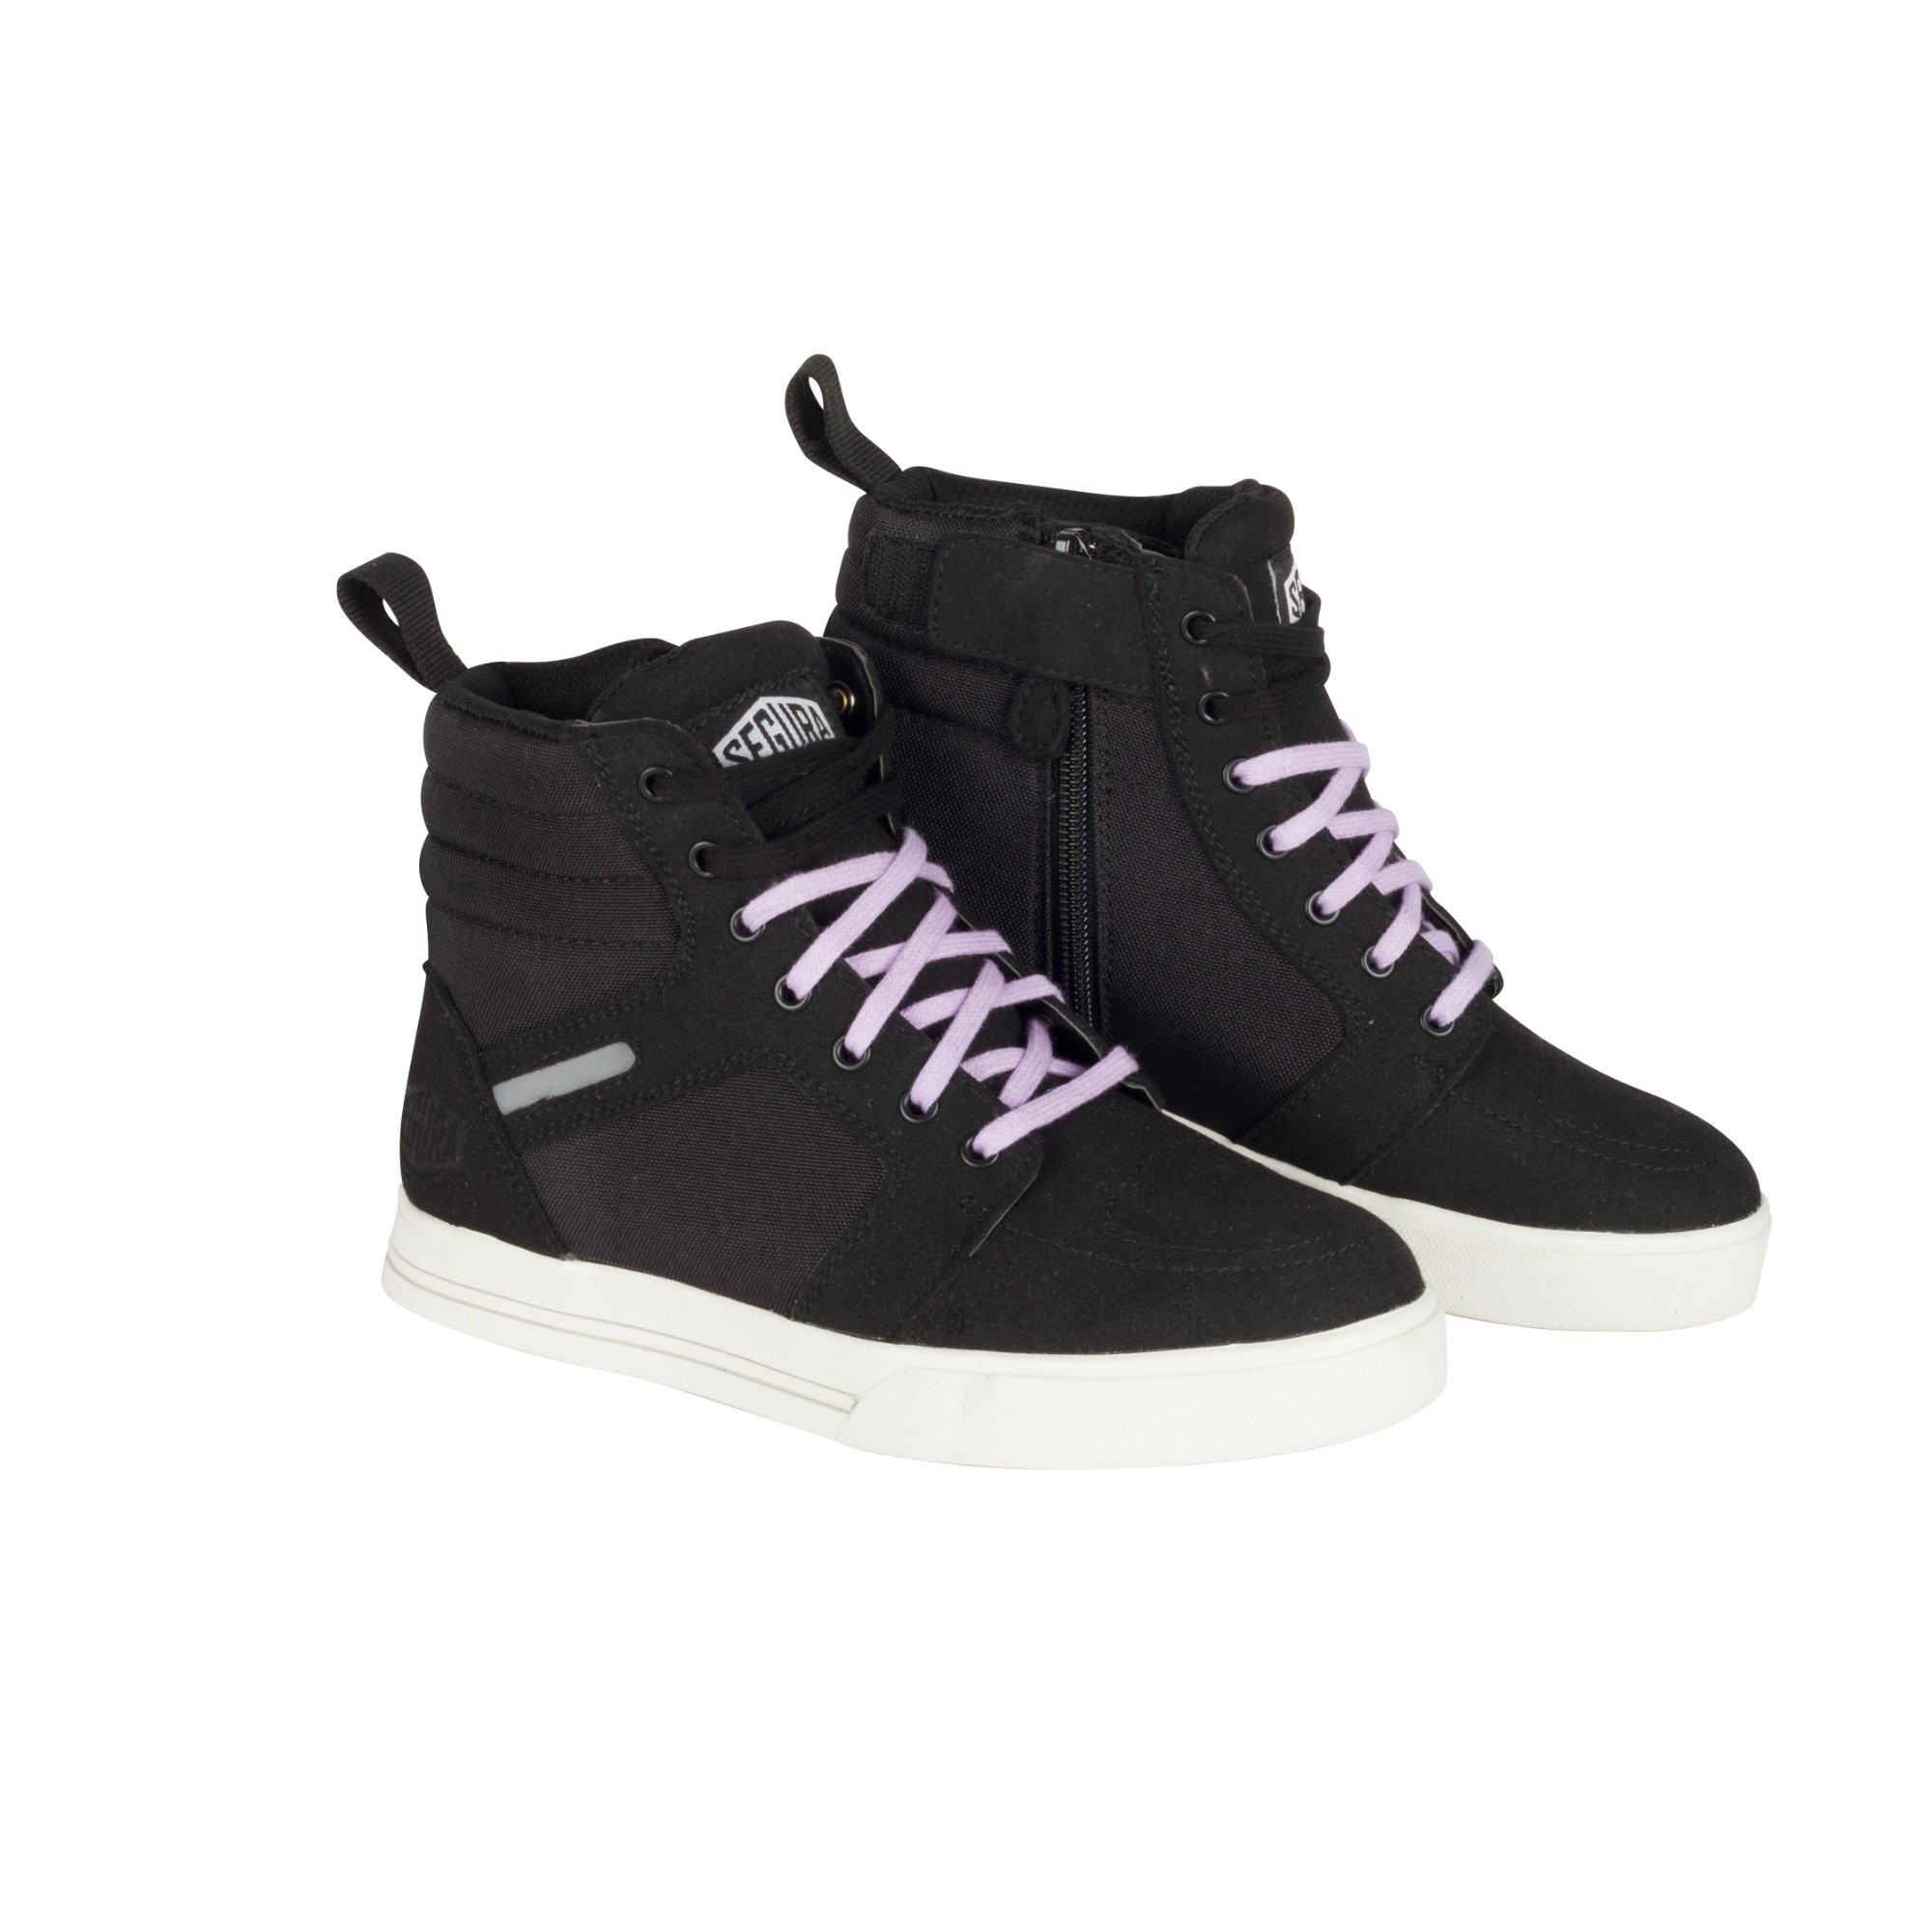 Image of Segura Lady Santana Sneakers Black Lilac Size 37 ID 3660815184158